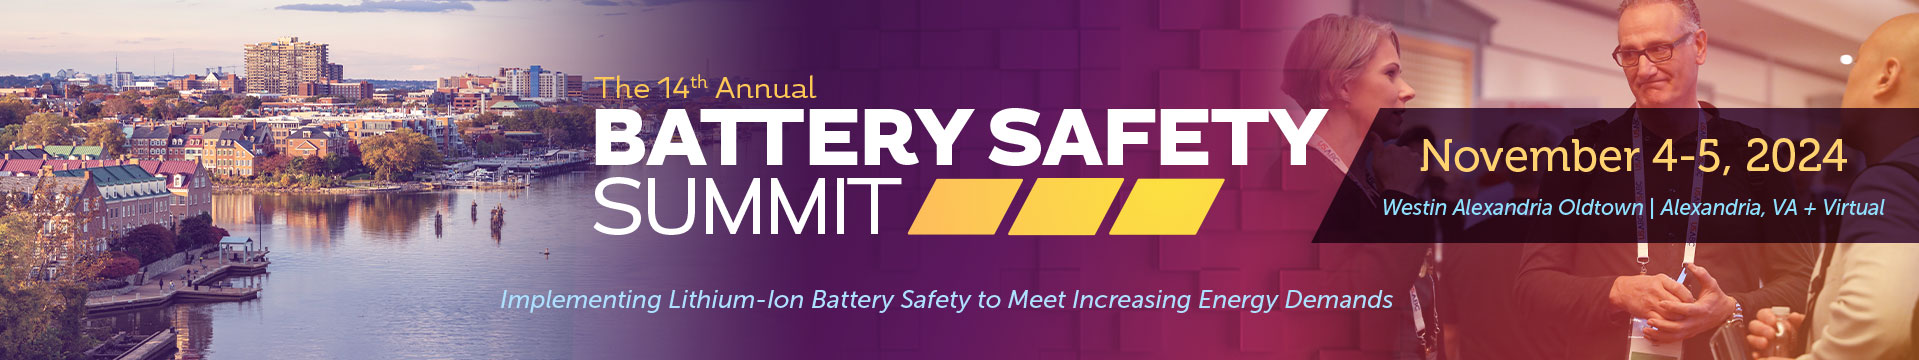 Battery Safety Summit 2024 Hero Banner